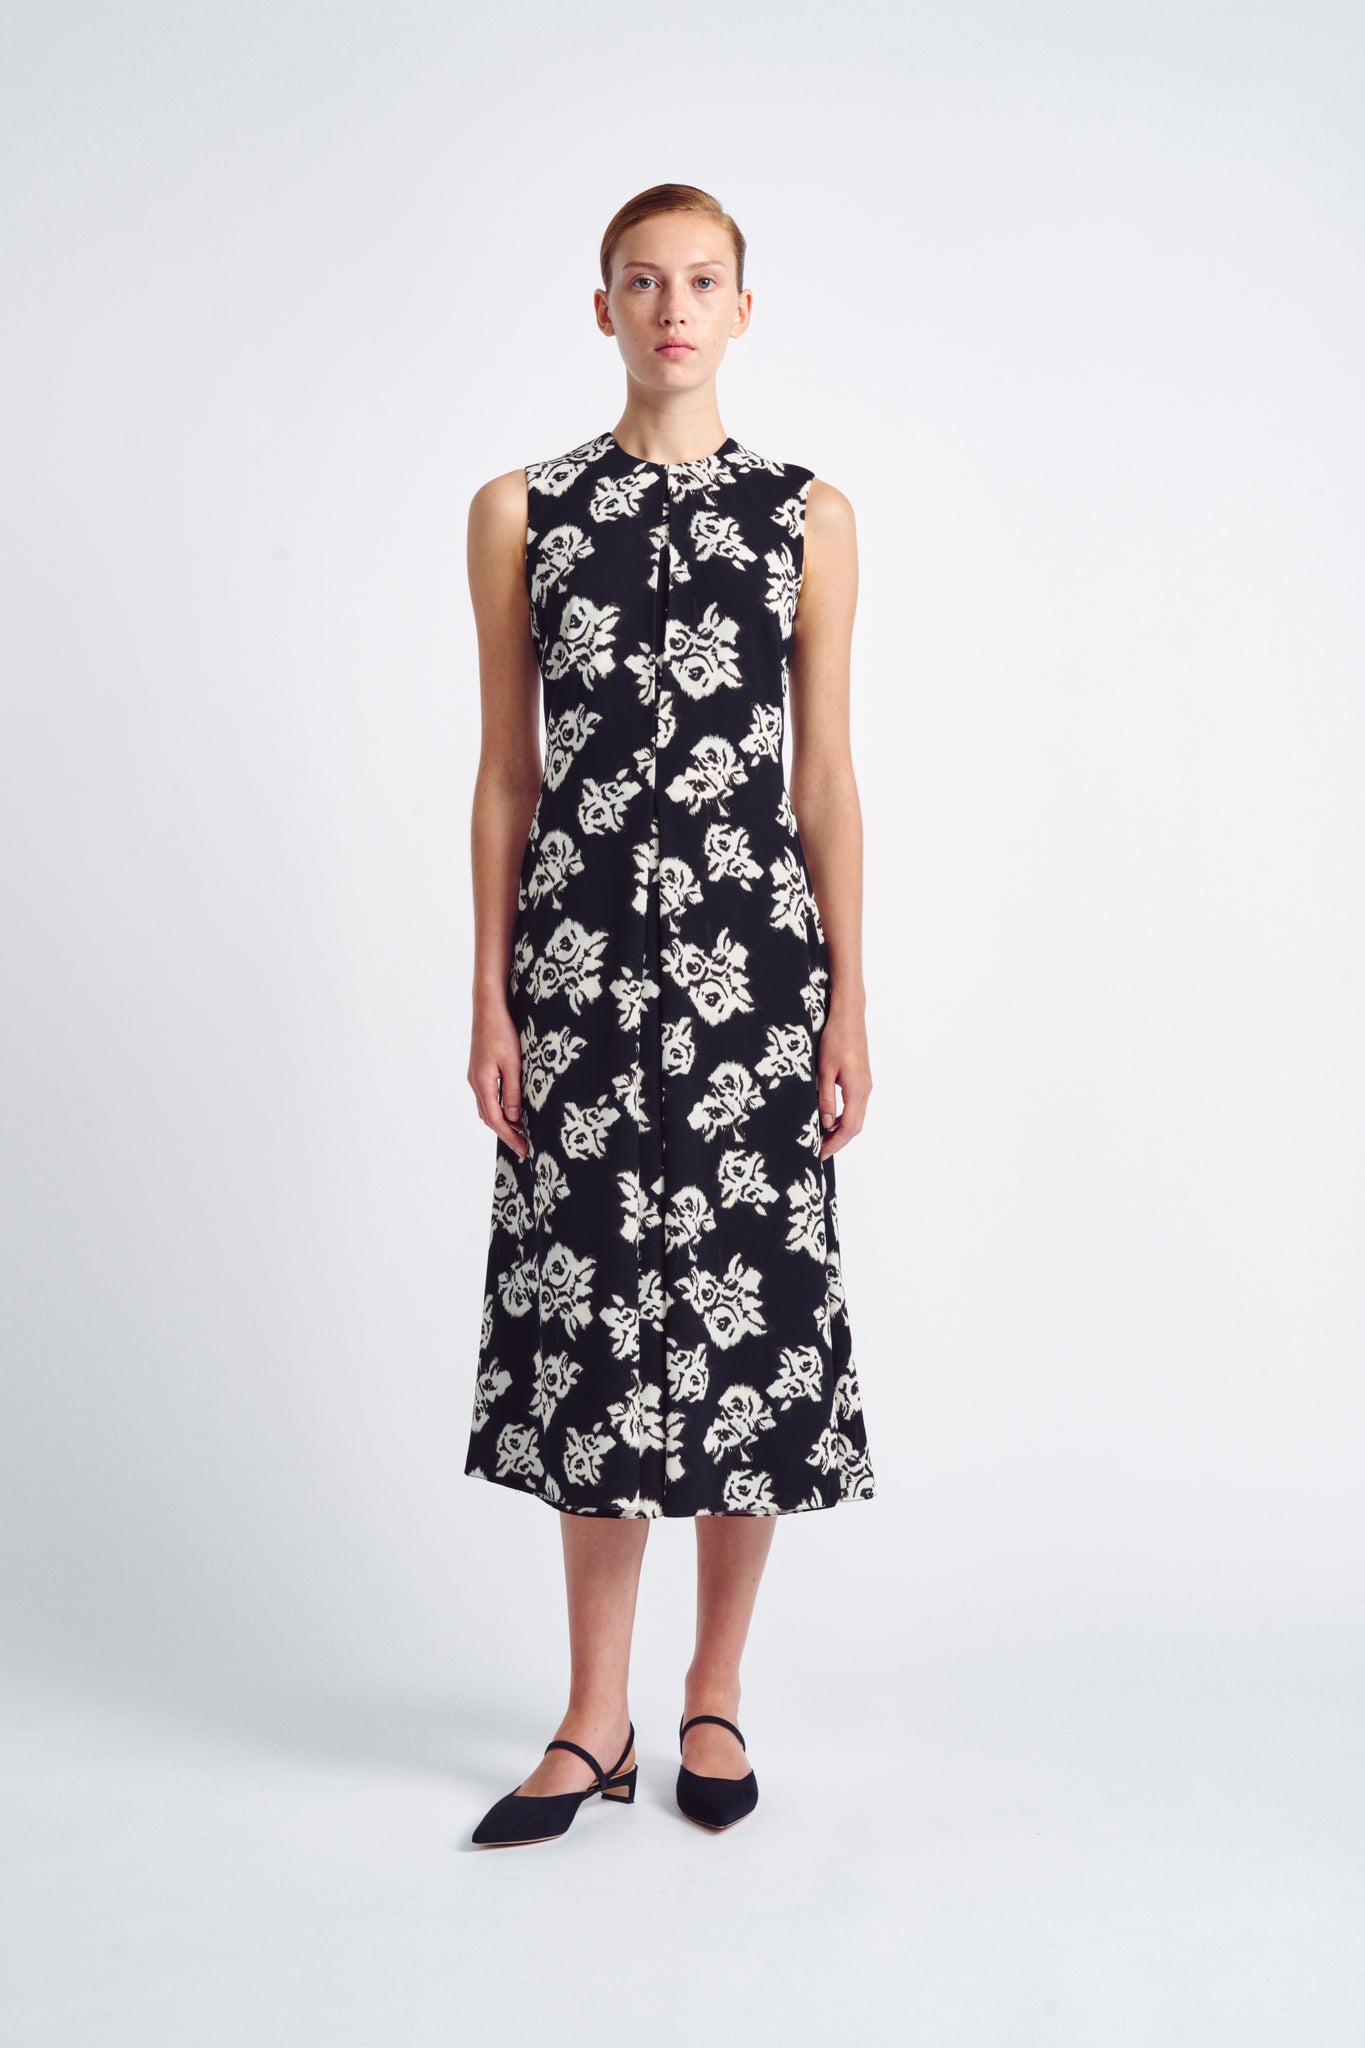 Ottilie Dress | Black and White Floral Printed Sleeveless Dress ...